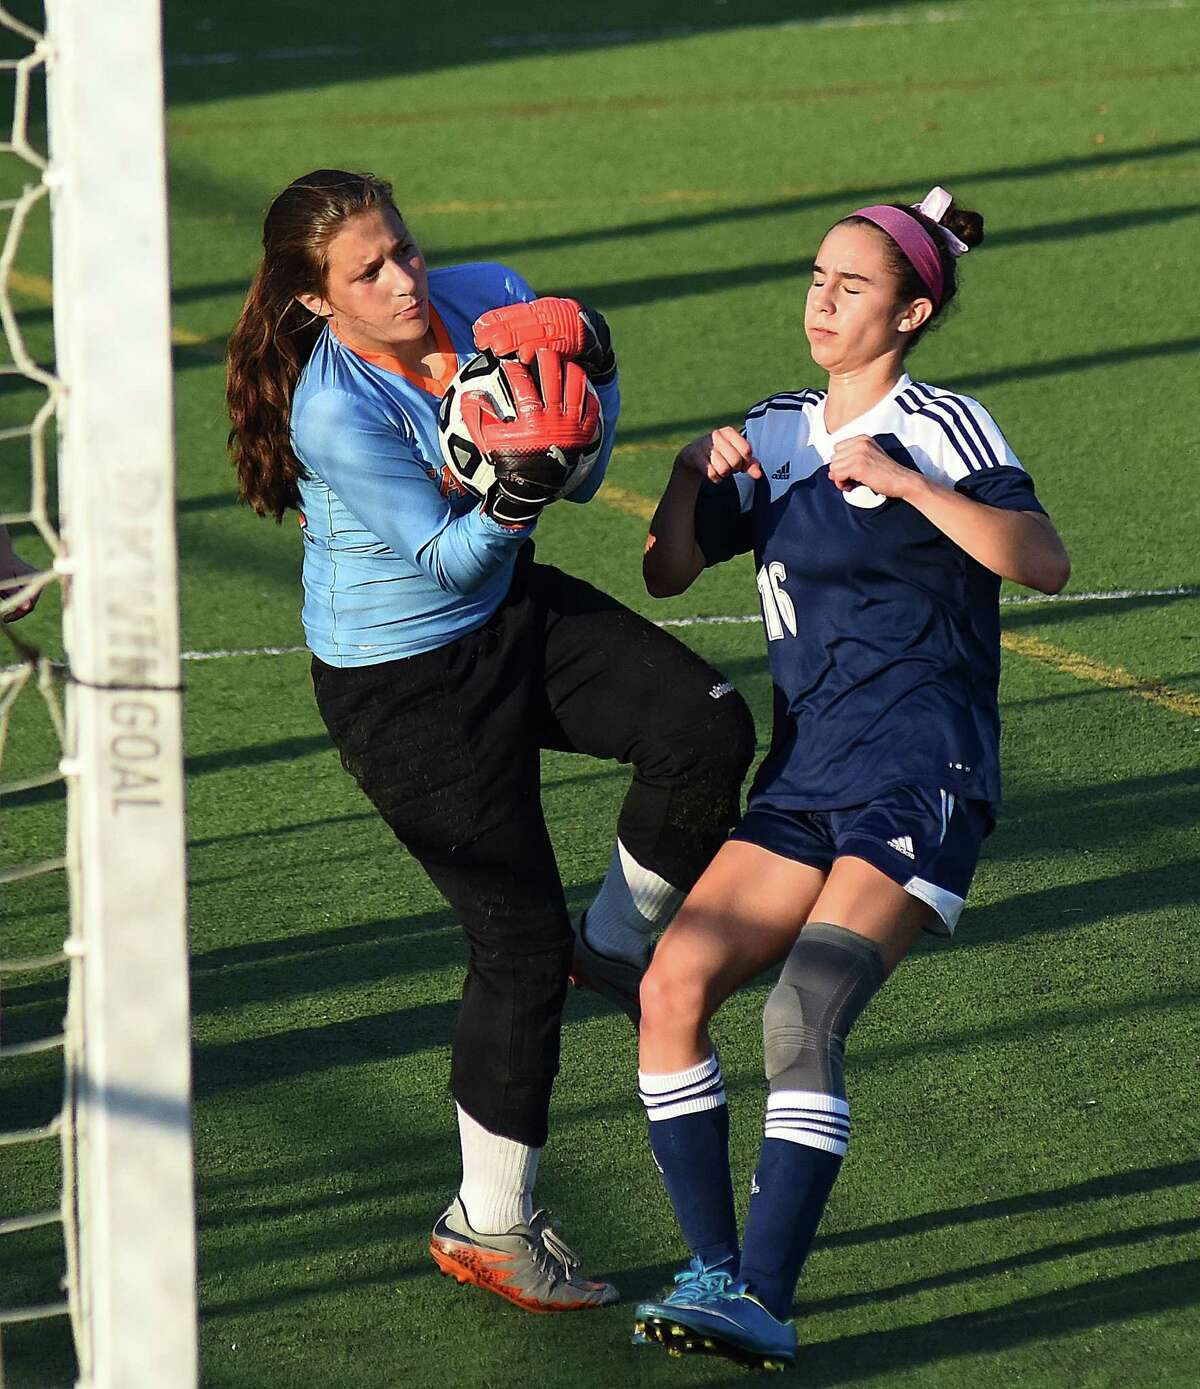 Stamford freshman goalkeeper Adriana Deltorto, left, makes a save as Wilton’s Carly Lattimer crashes the net during Monday’s FCIAC girls soccer game in Stamford. Wilton won, 3-0.